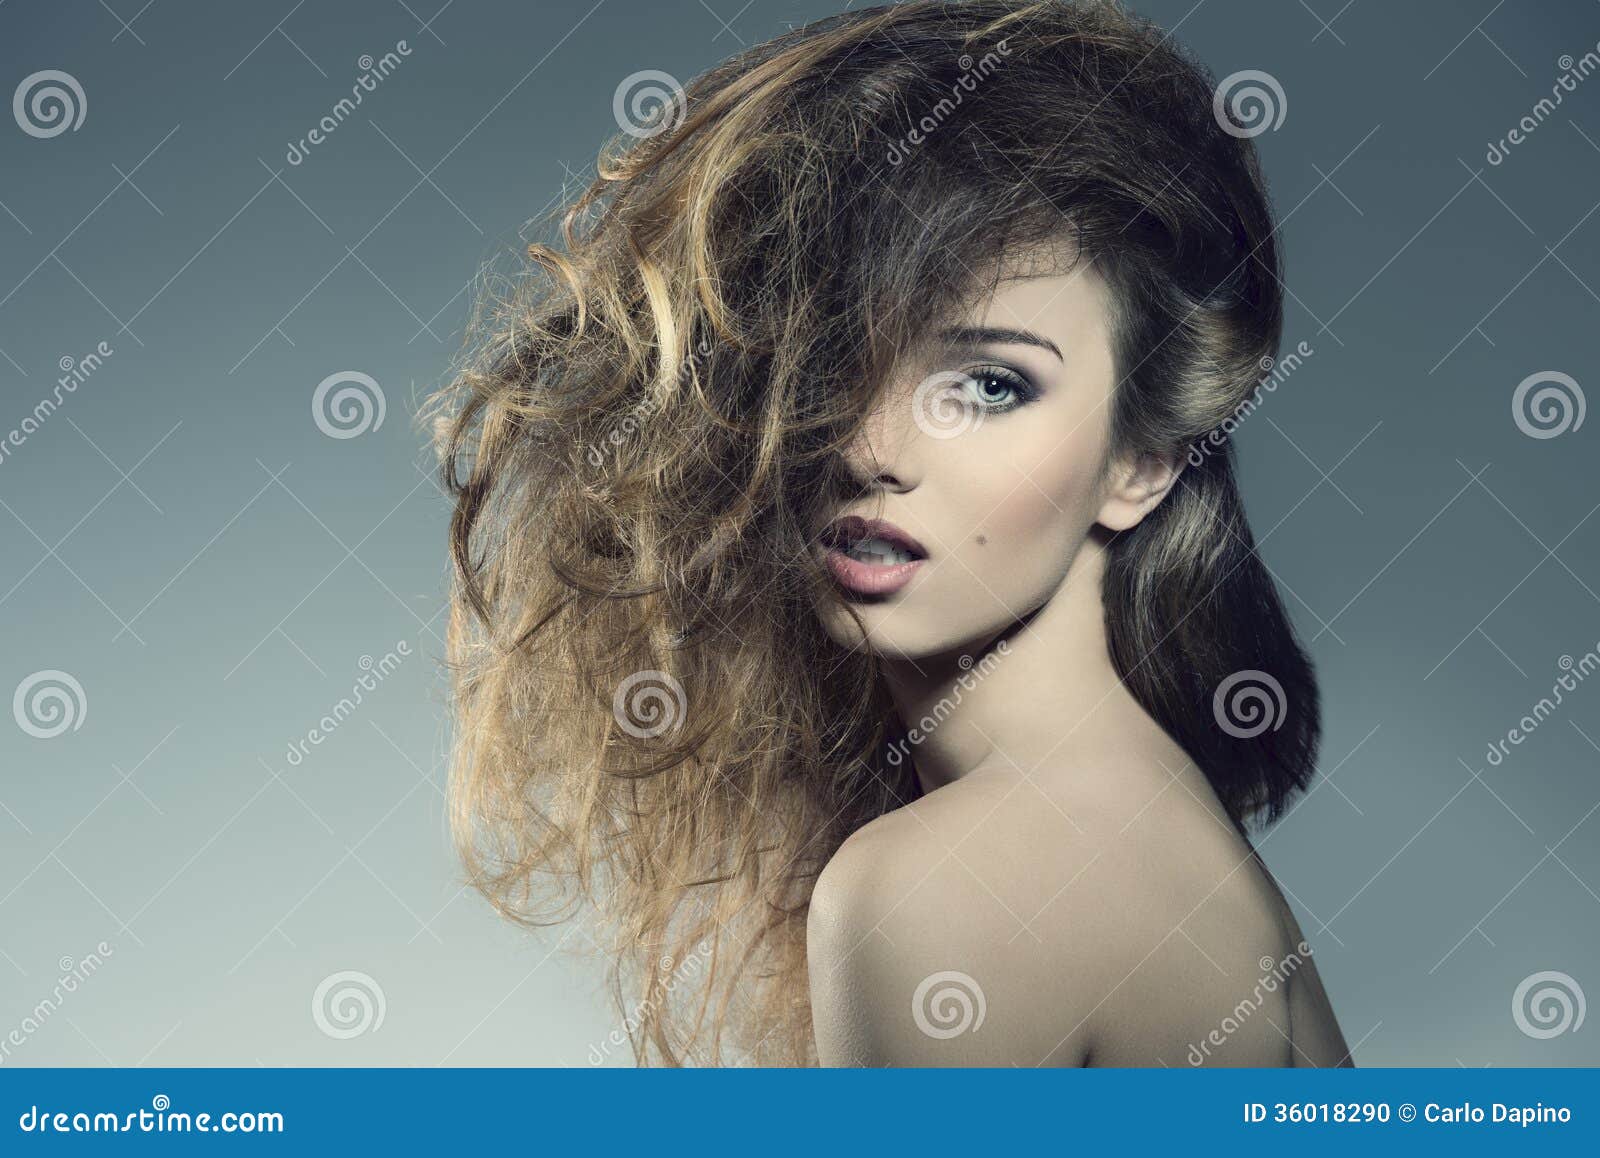 woman with bushy hair